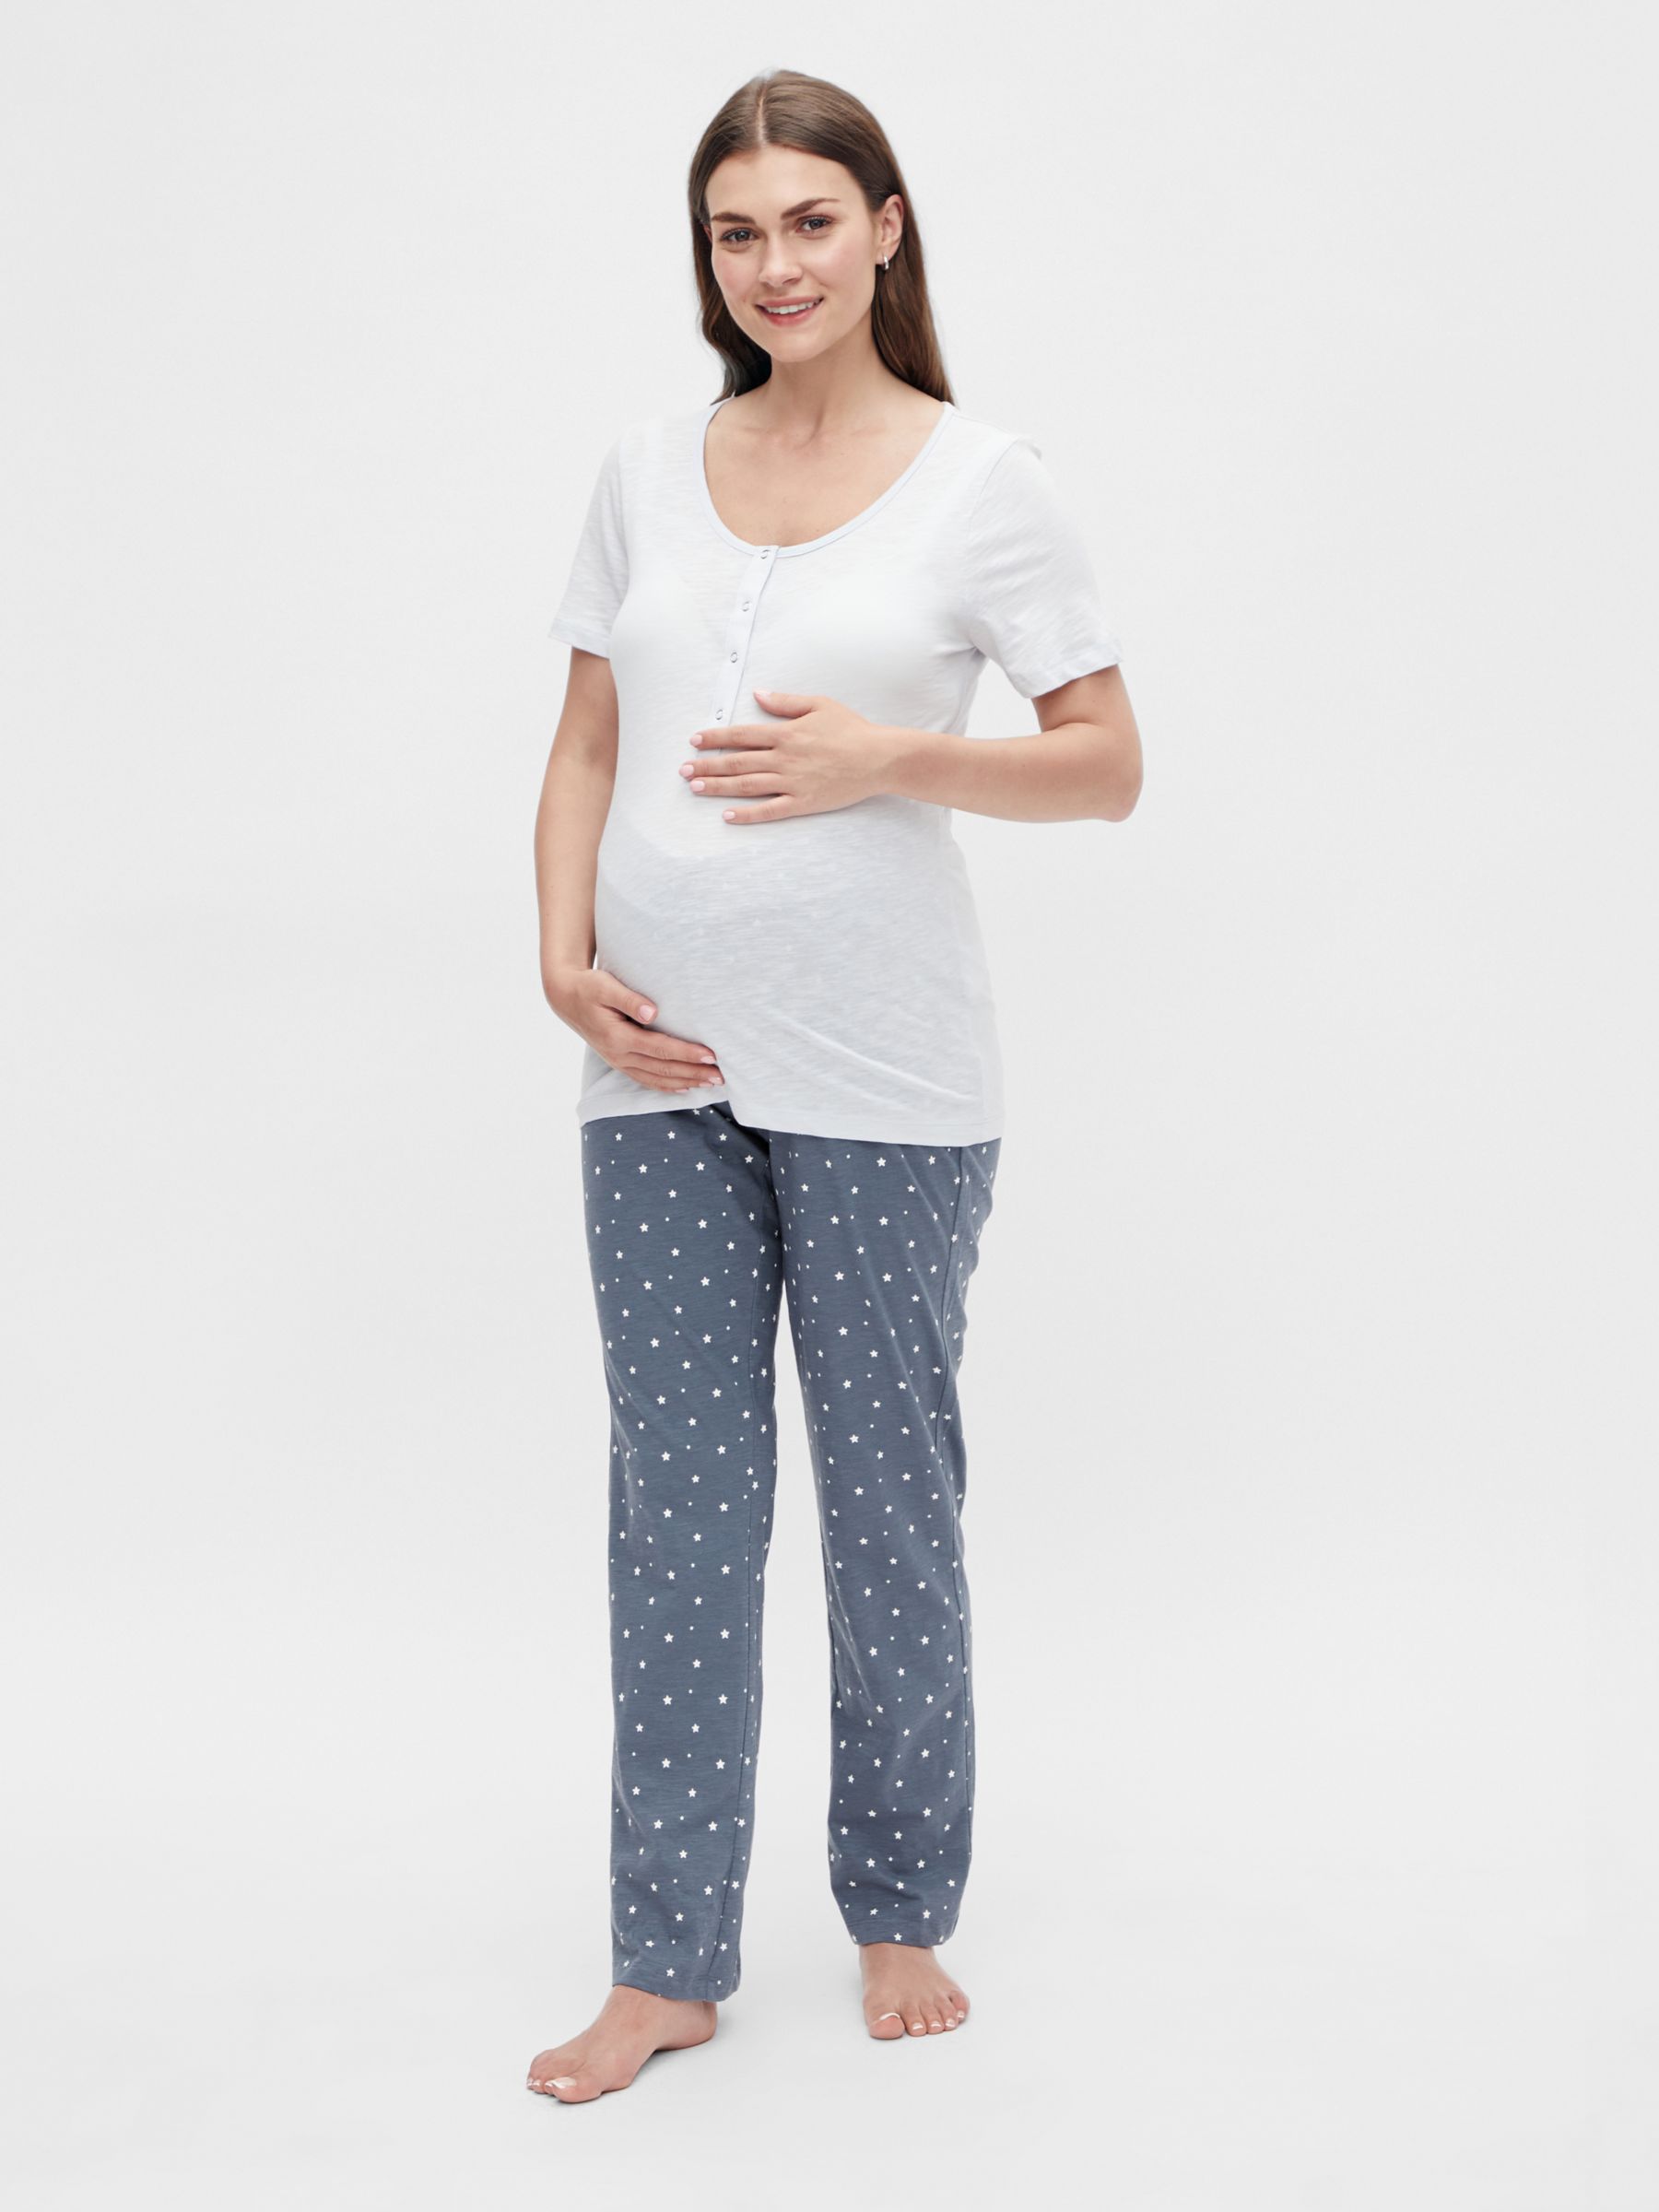 Buy Mamalicious Grey Maternity Button Front Comfort Night Dress